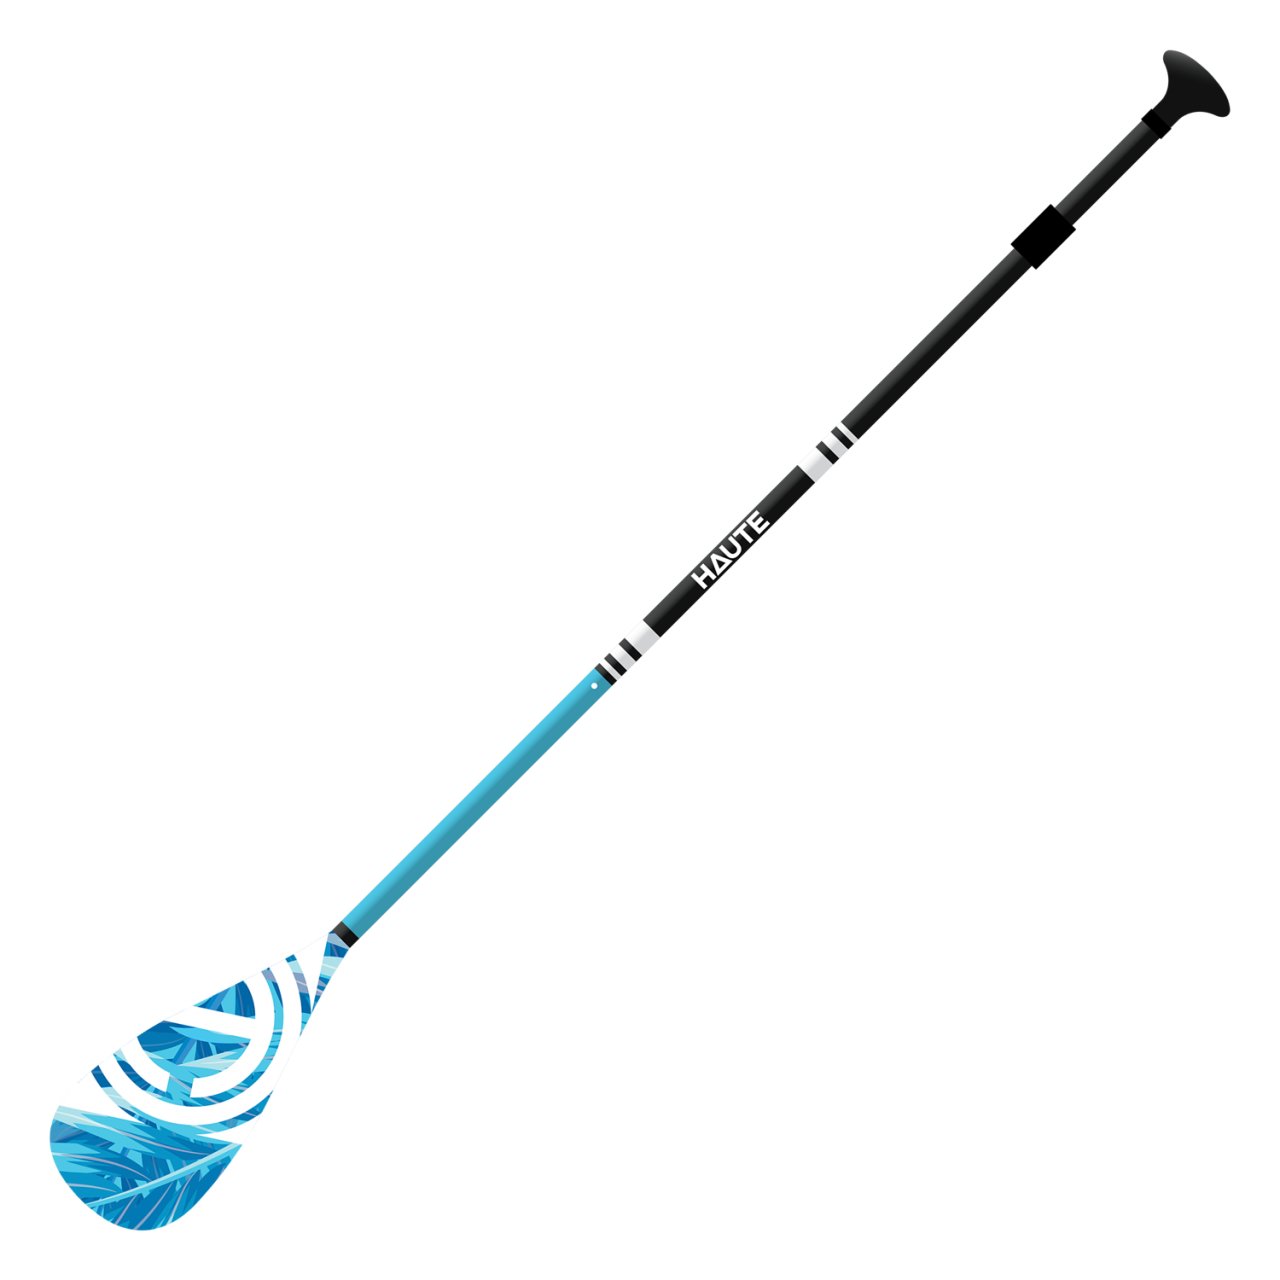 Haute 3 Parçalı Stand Up Paddle Küreği 170/210cm - Mavi